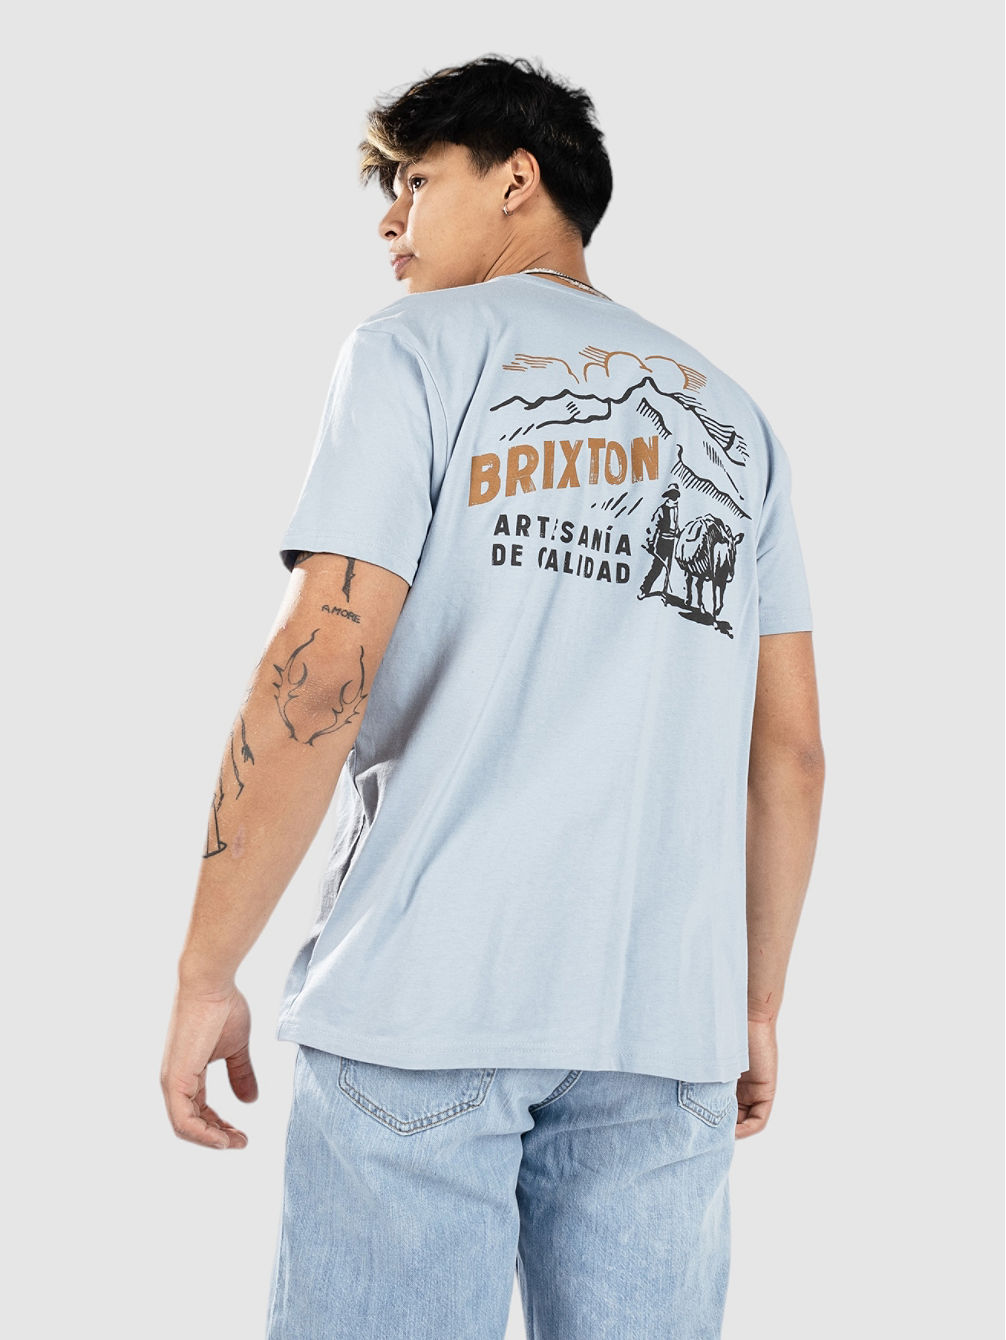 Harvester Tailored T-shirt